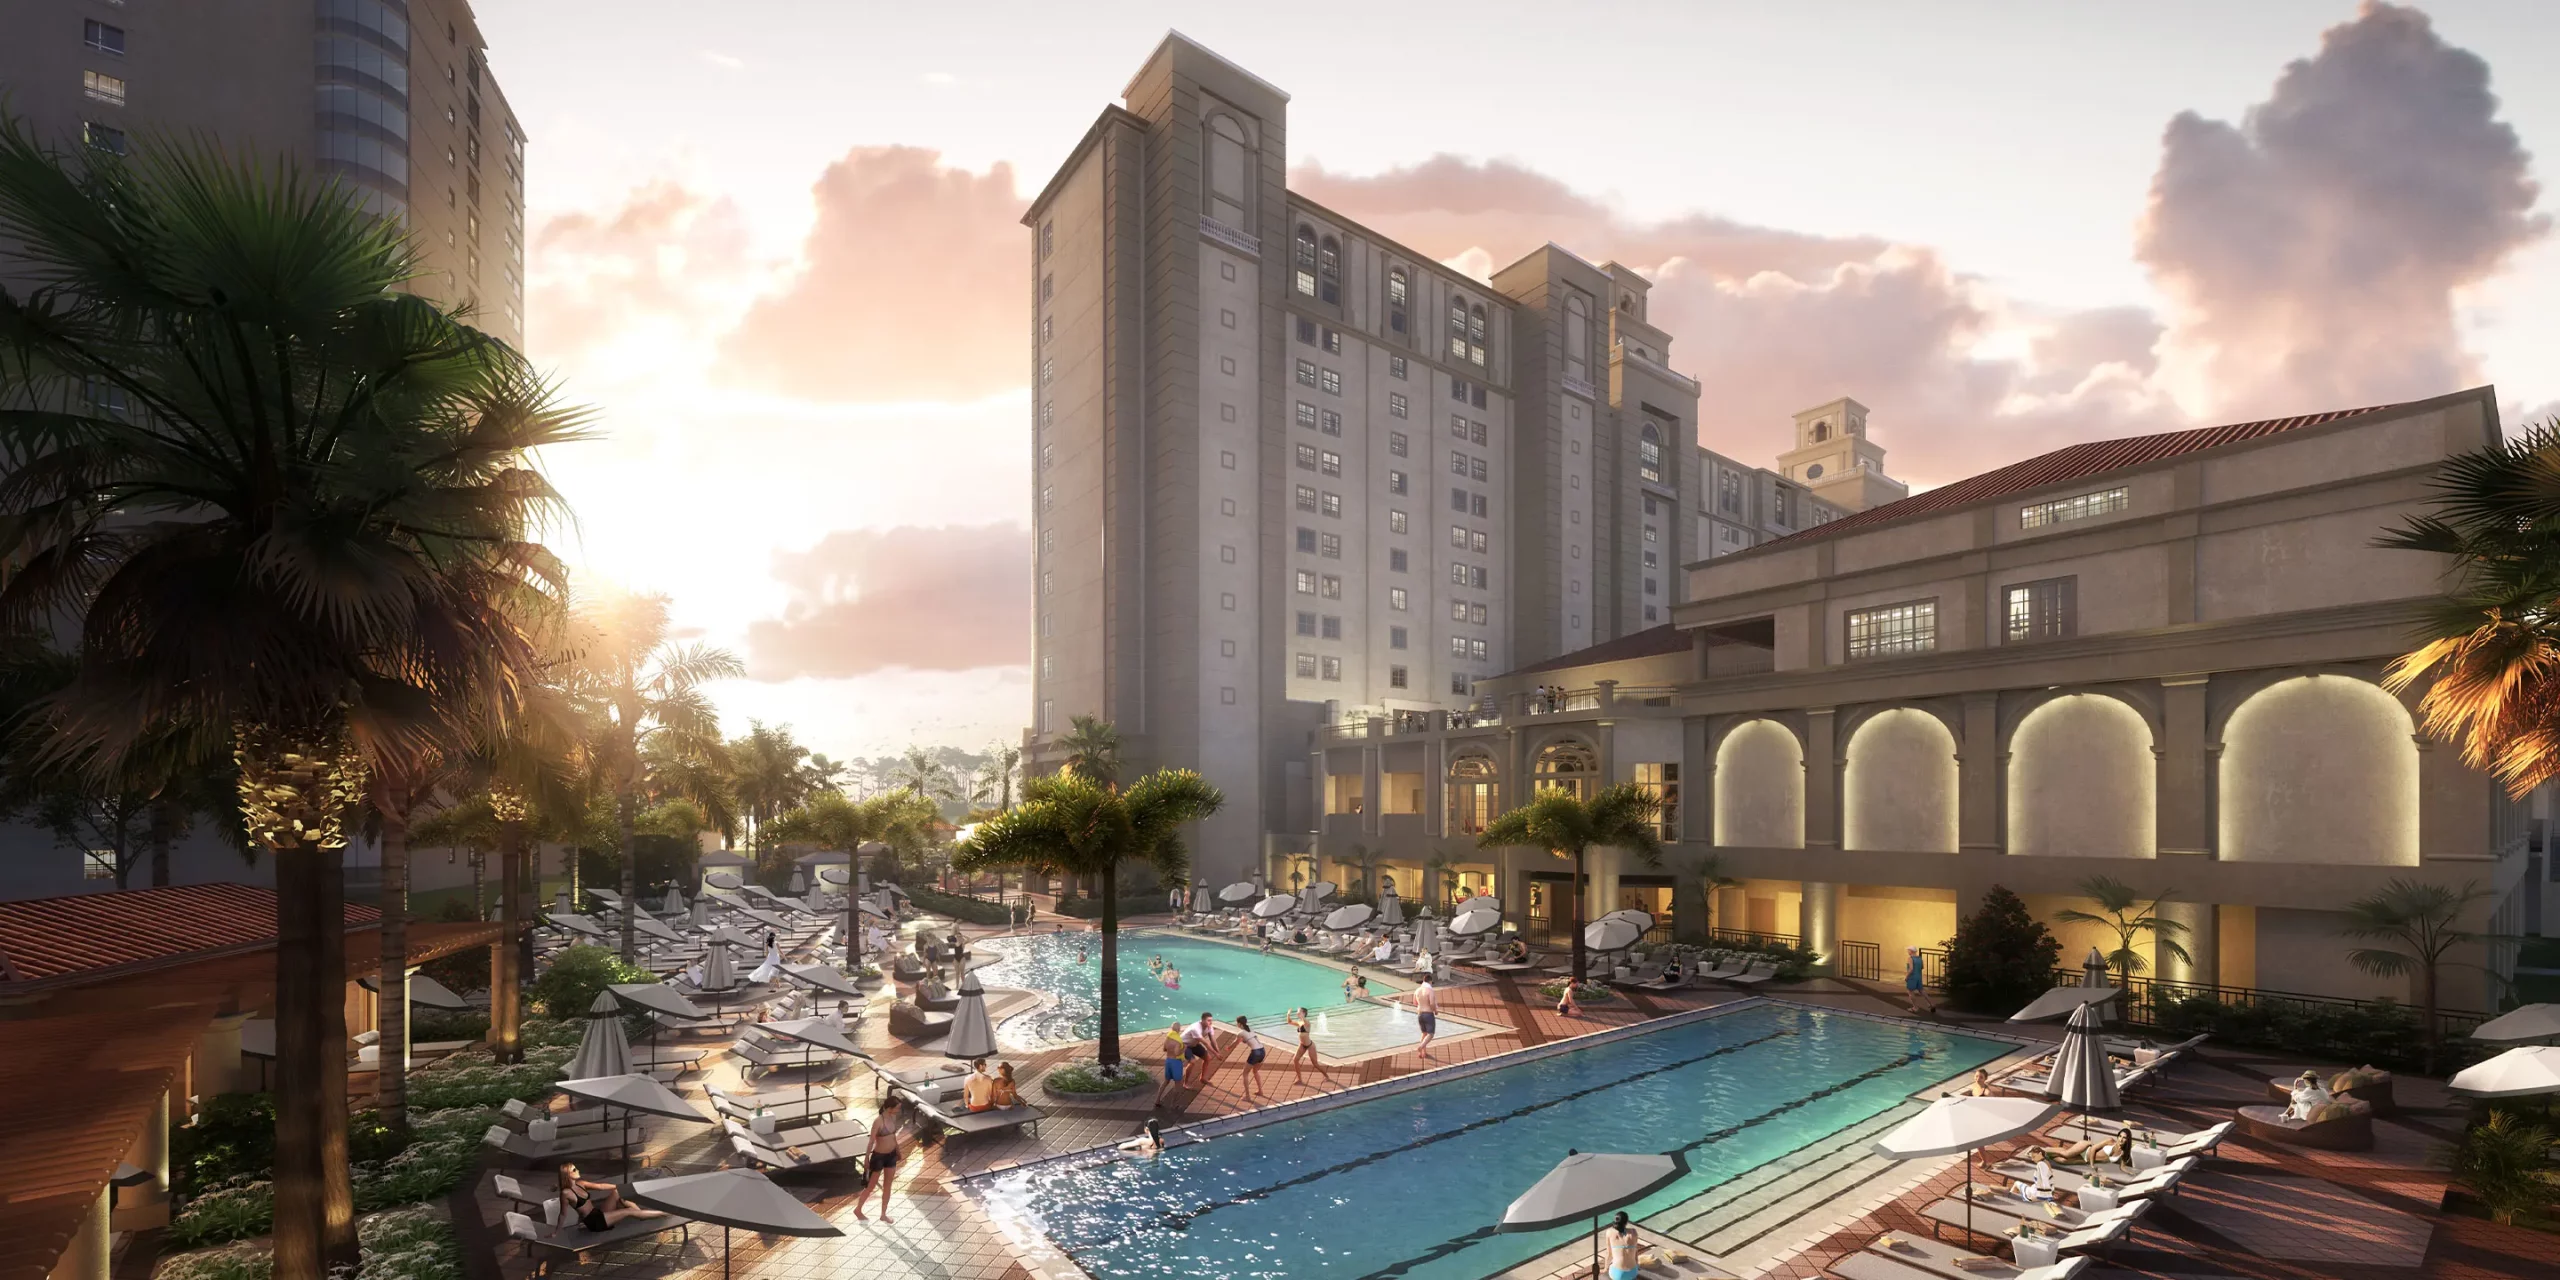 The Ritz-Carlton Naples Beach Resort, Exterior Rendering at Dusk